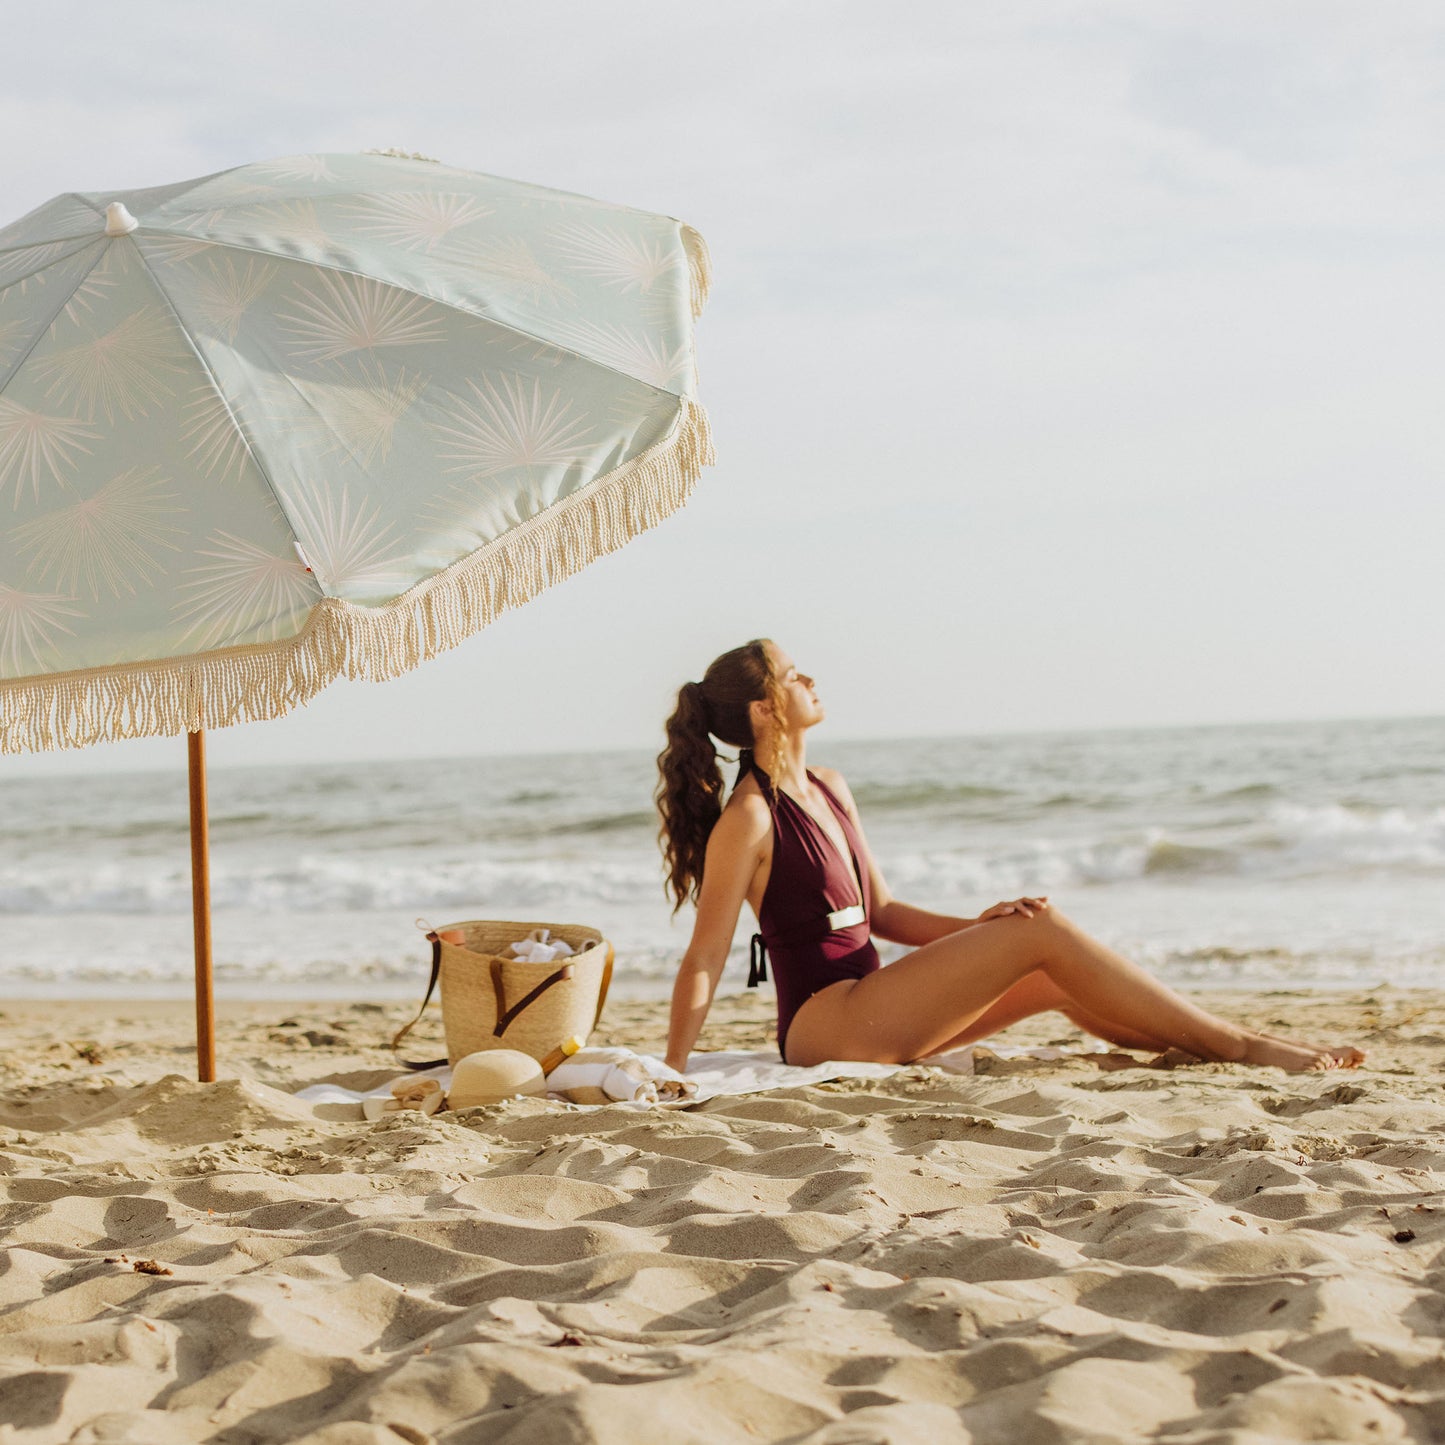 Summerland Beach Umbrella - Palm Beach